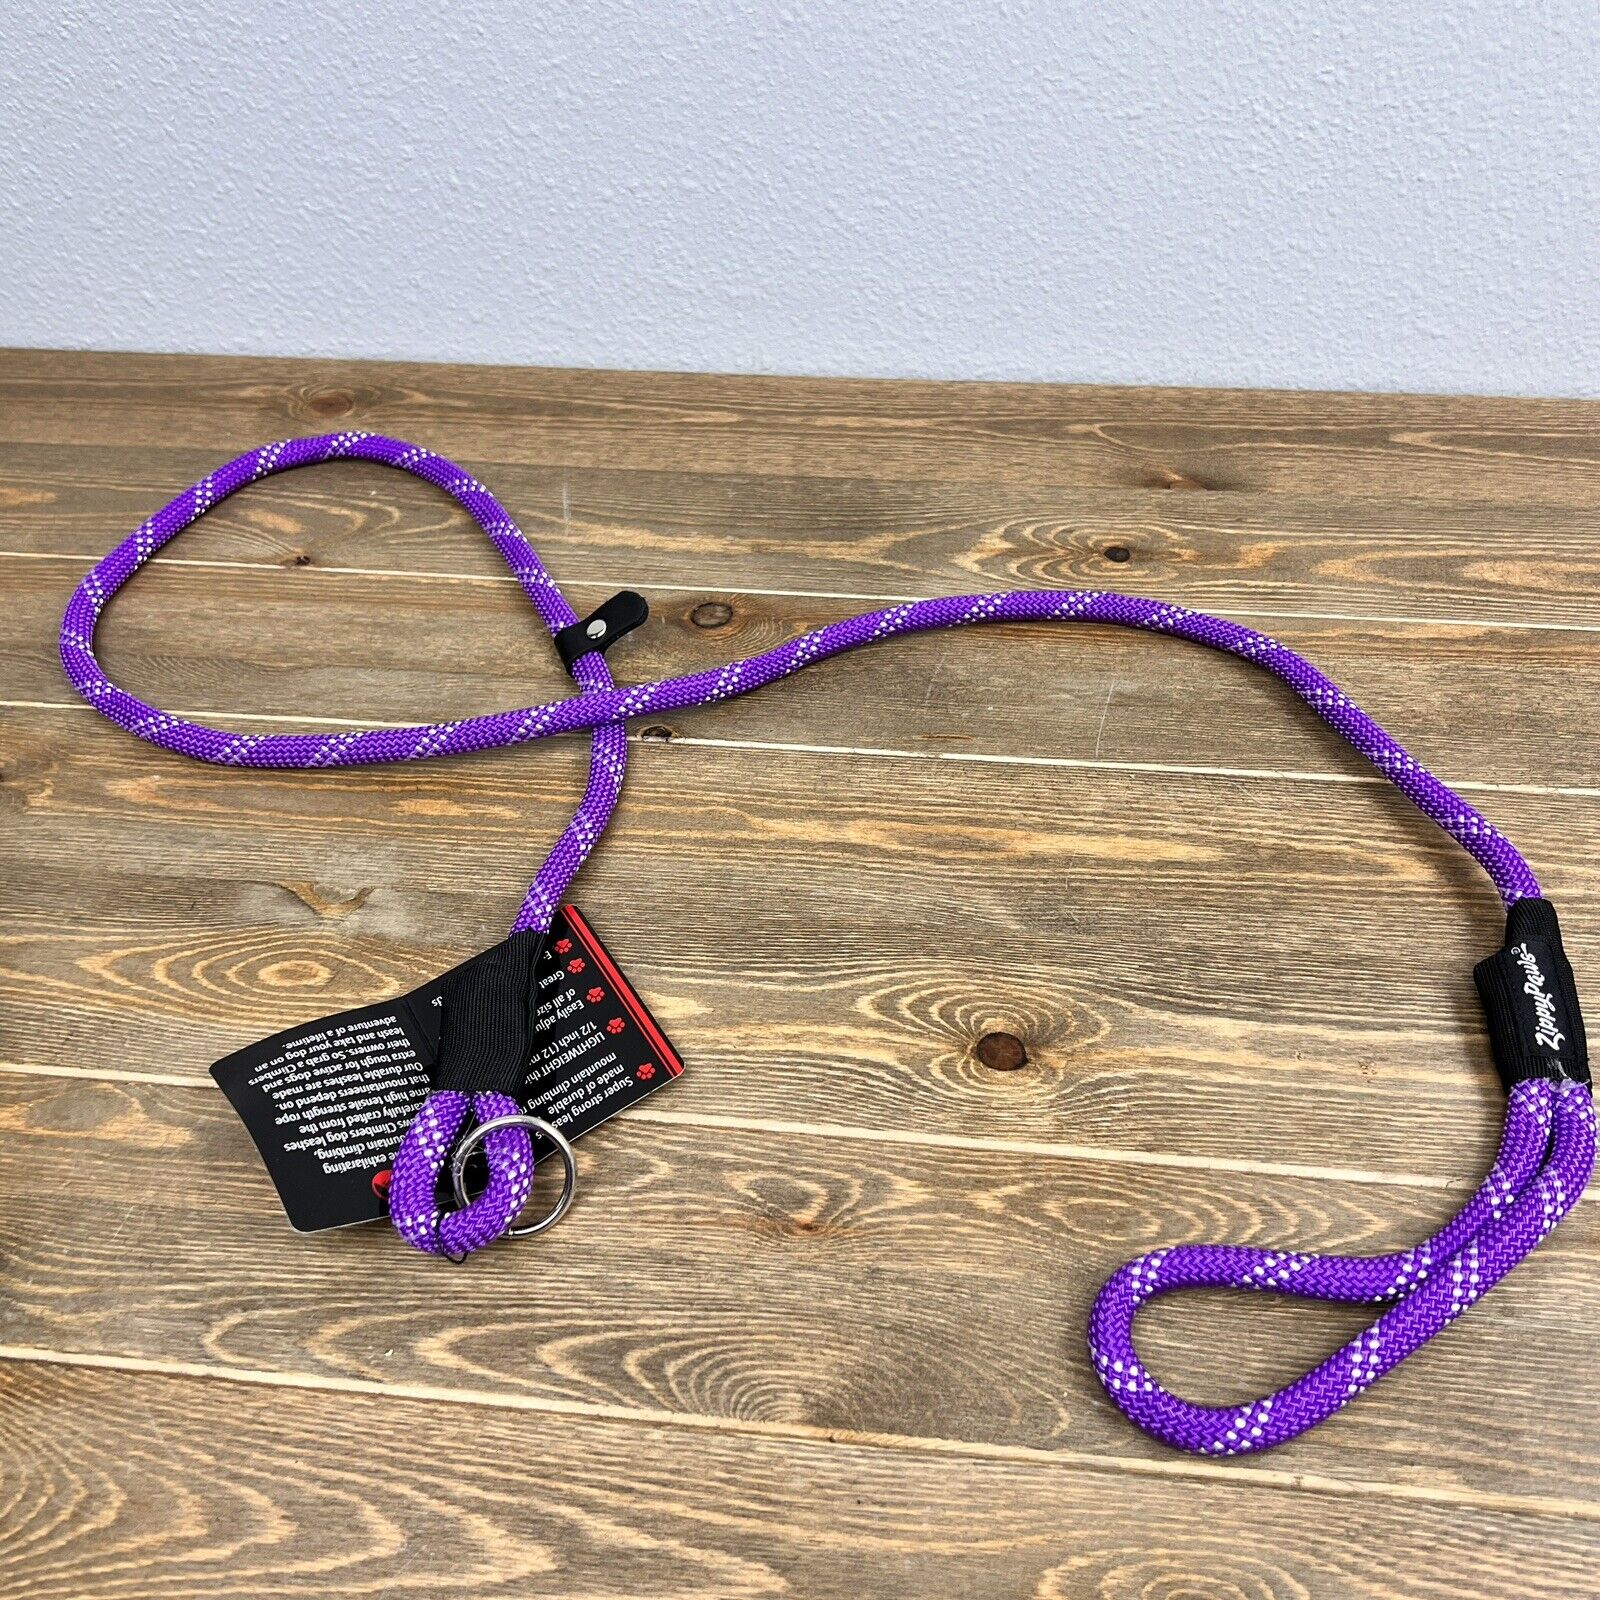 ZippyPaws Climbers Rope Leash Original 6 Ft - Purple Dog Lead